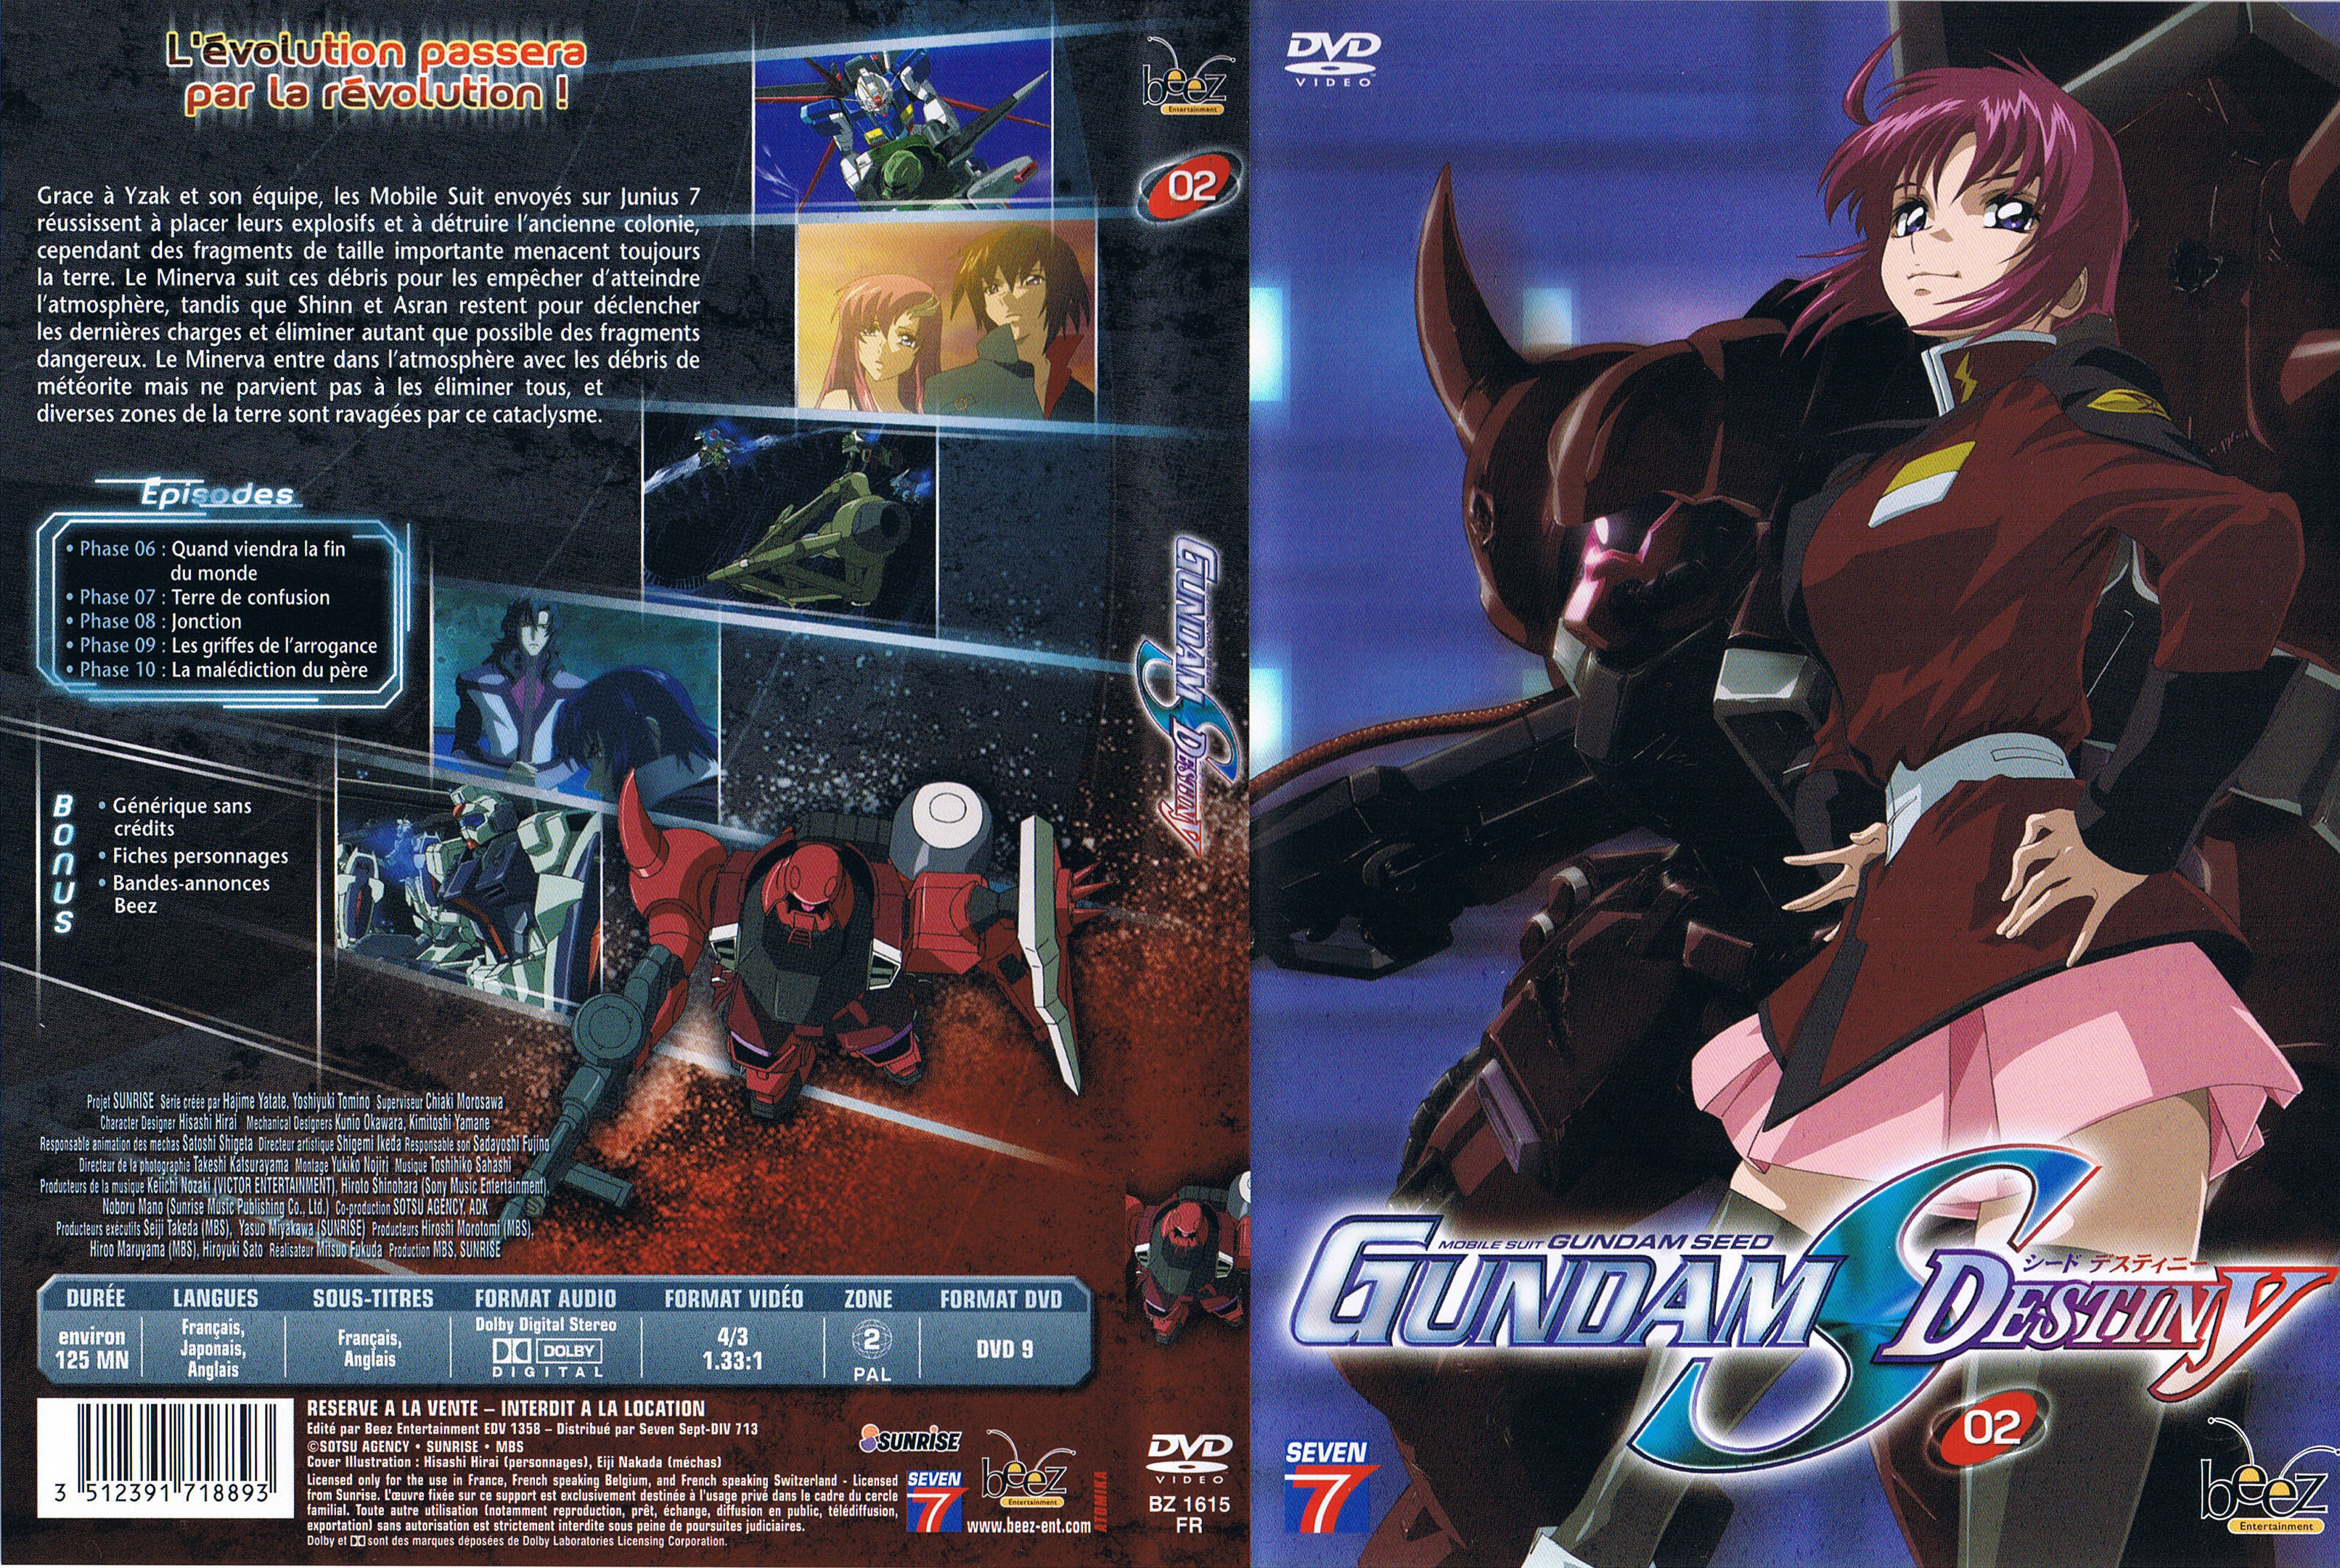 Jaquette DVD Gundam destiny vol 02